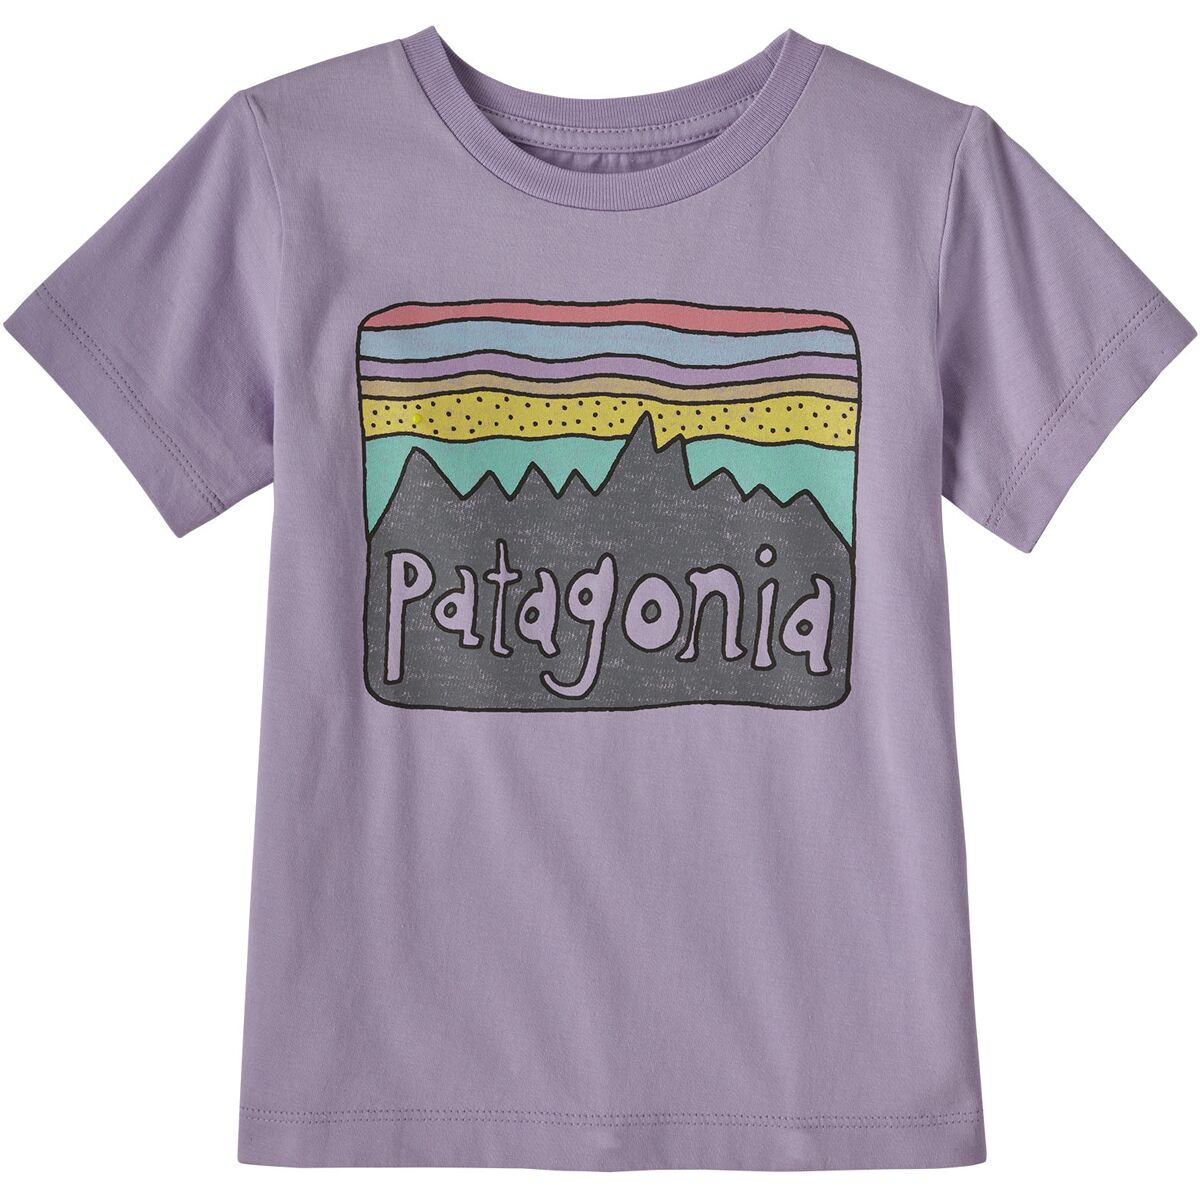 Patagonia - Baby Regenerative Organic Certified Cotton Fitz Roy Skies T-Shirt Lune w/ BoardshortsPurple